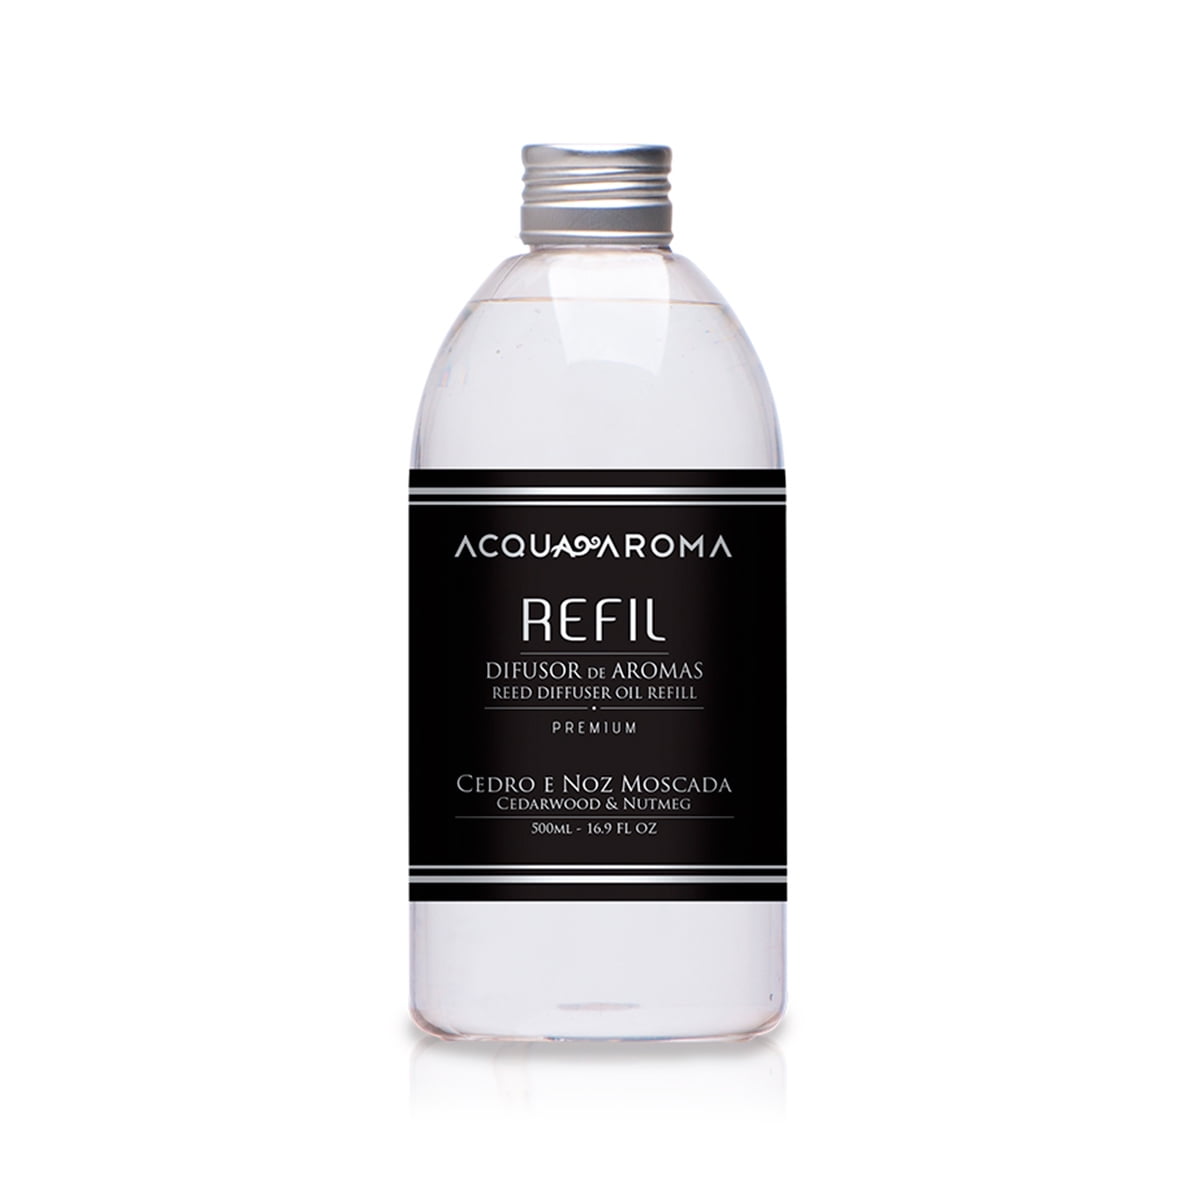 Acqua Aroma Fraser Fir Reed Diffuser Oil Refill 6.8 FL OZ (200ml